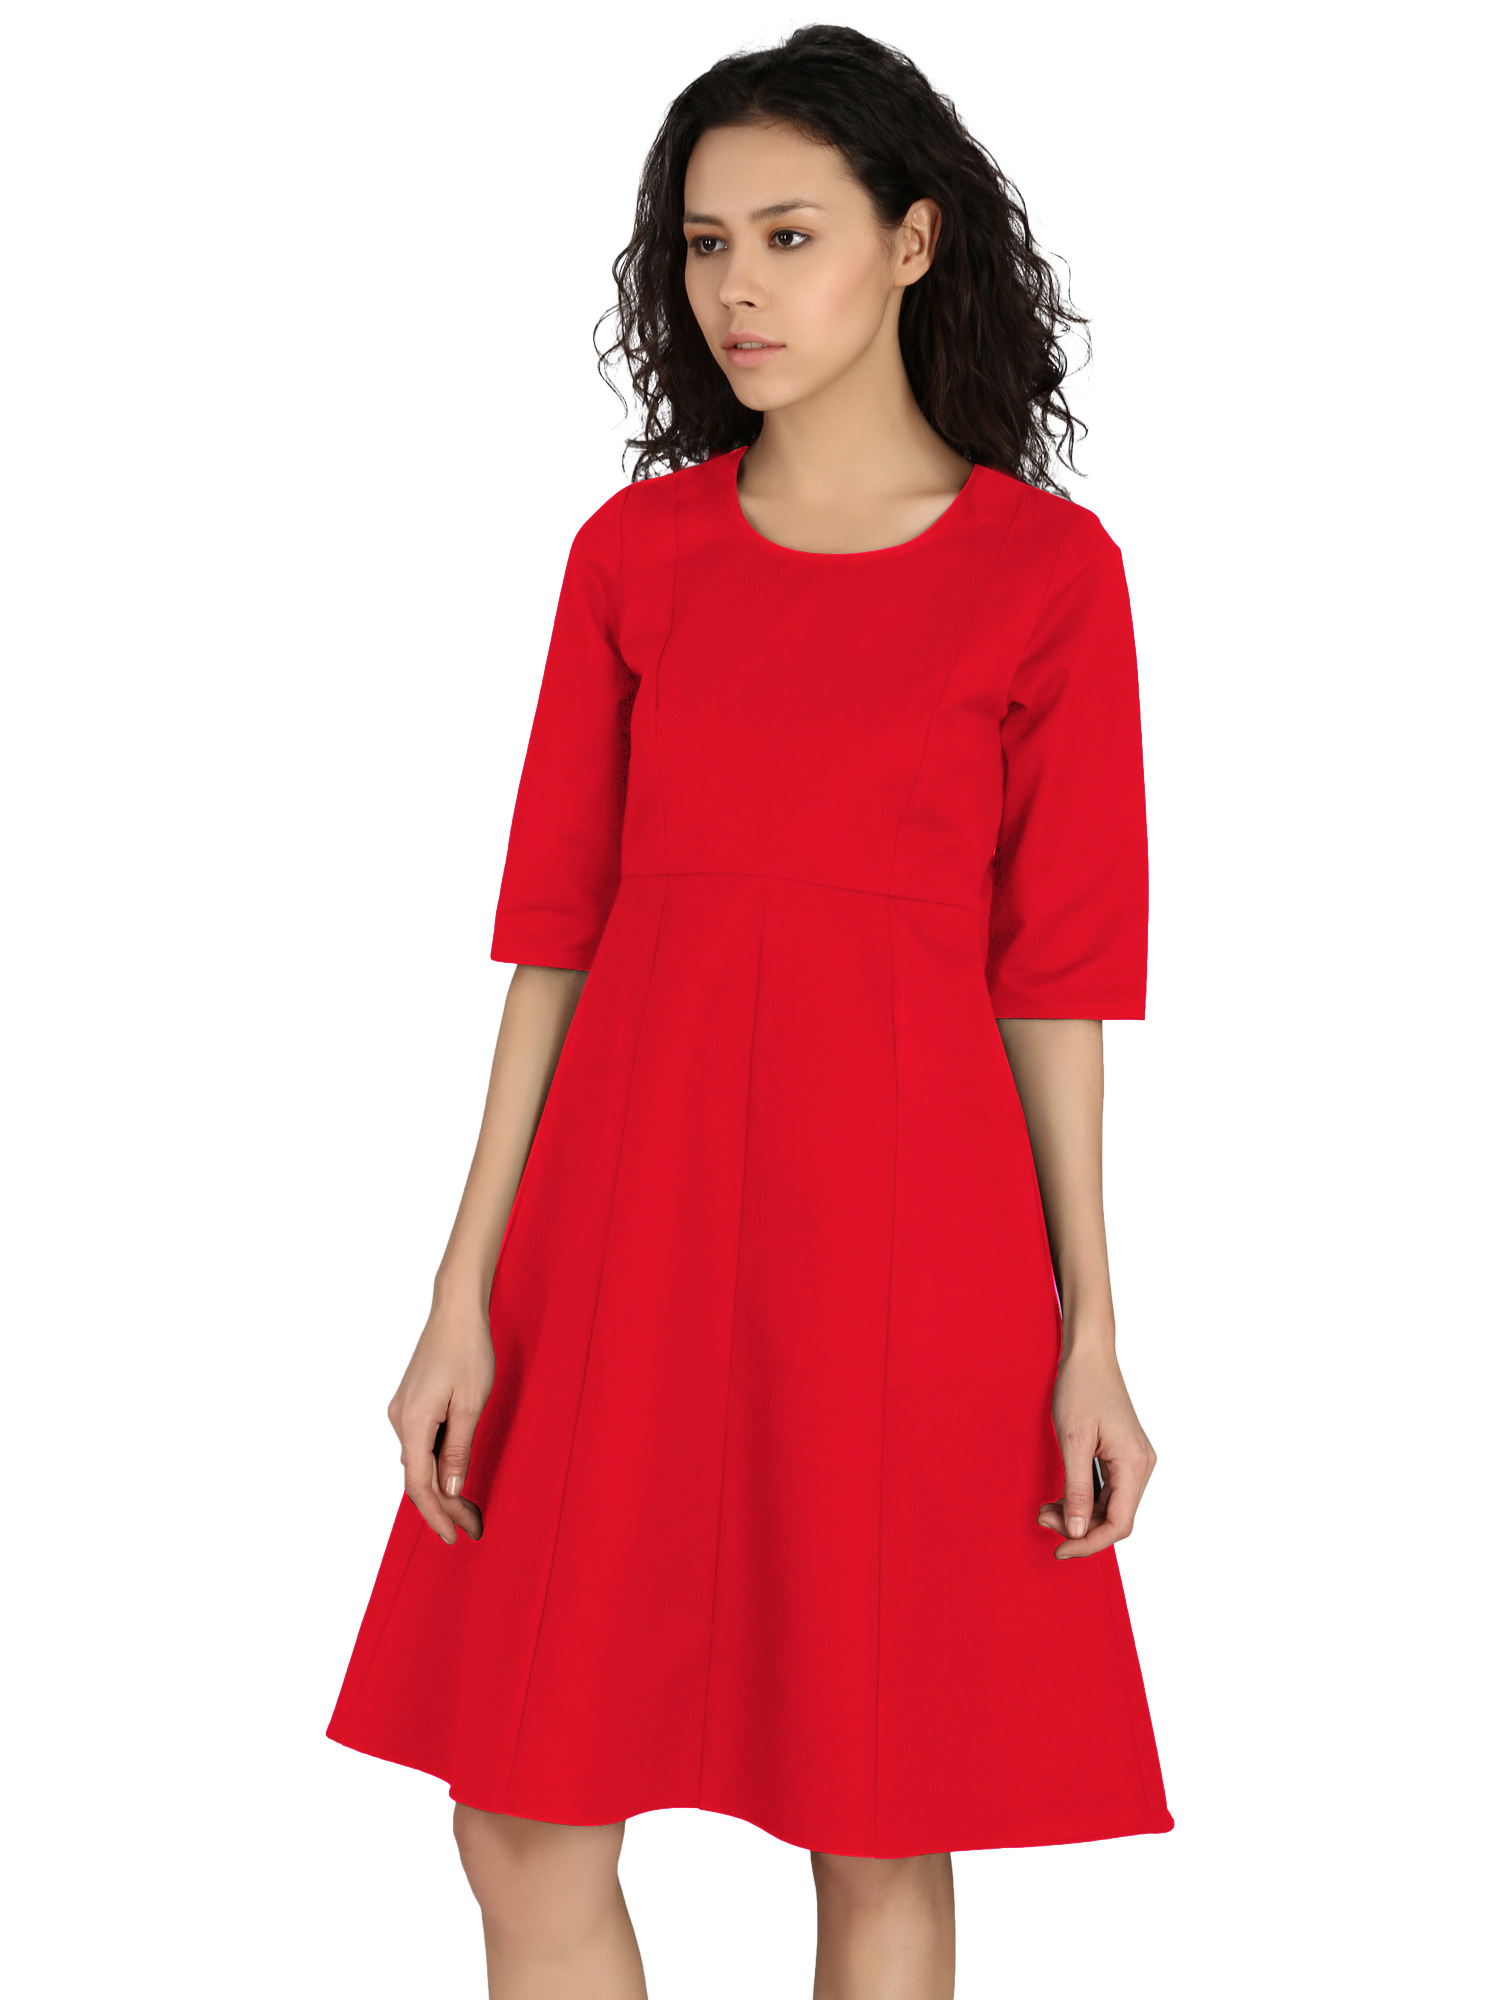 Fitted Sleeve Sheath Work Wear Dress Red - Back